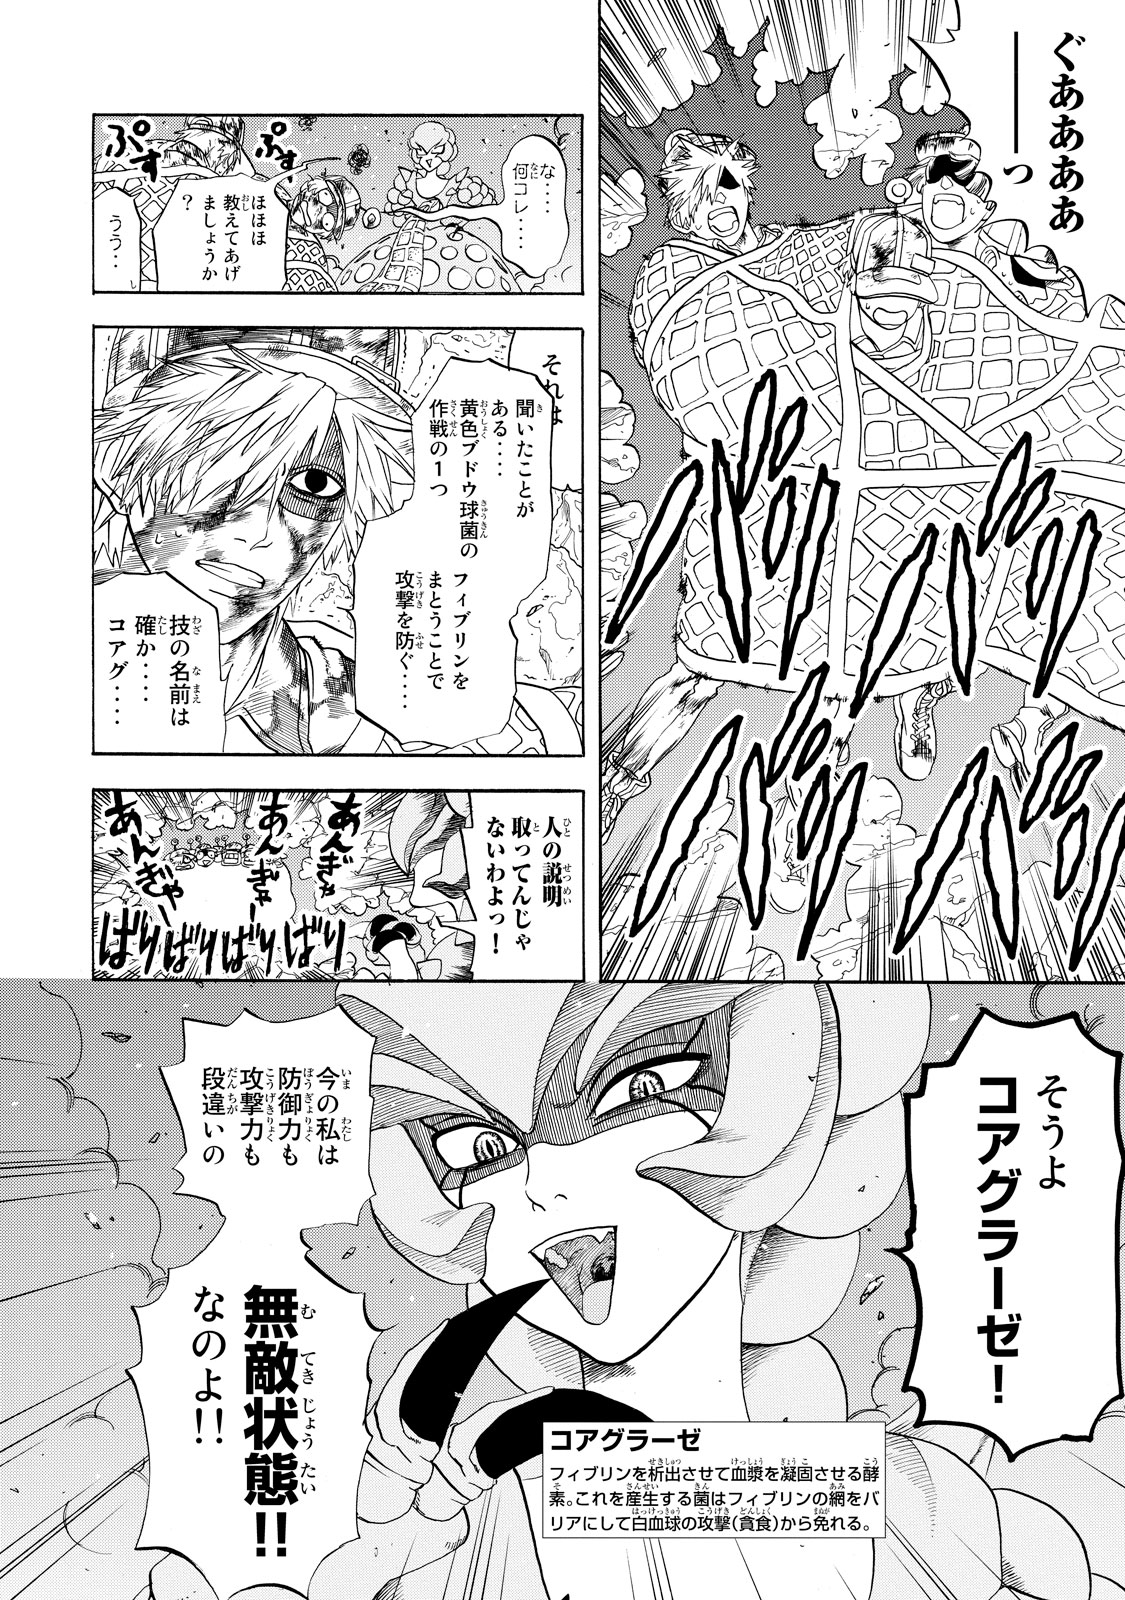 Hataraku Saibou - Chapter 15 - Page 18